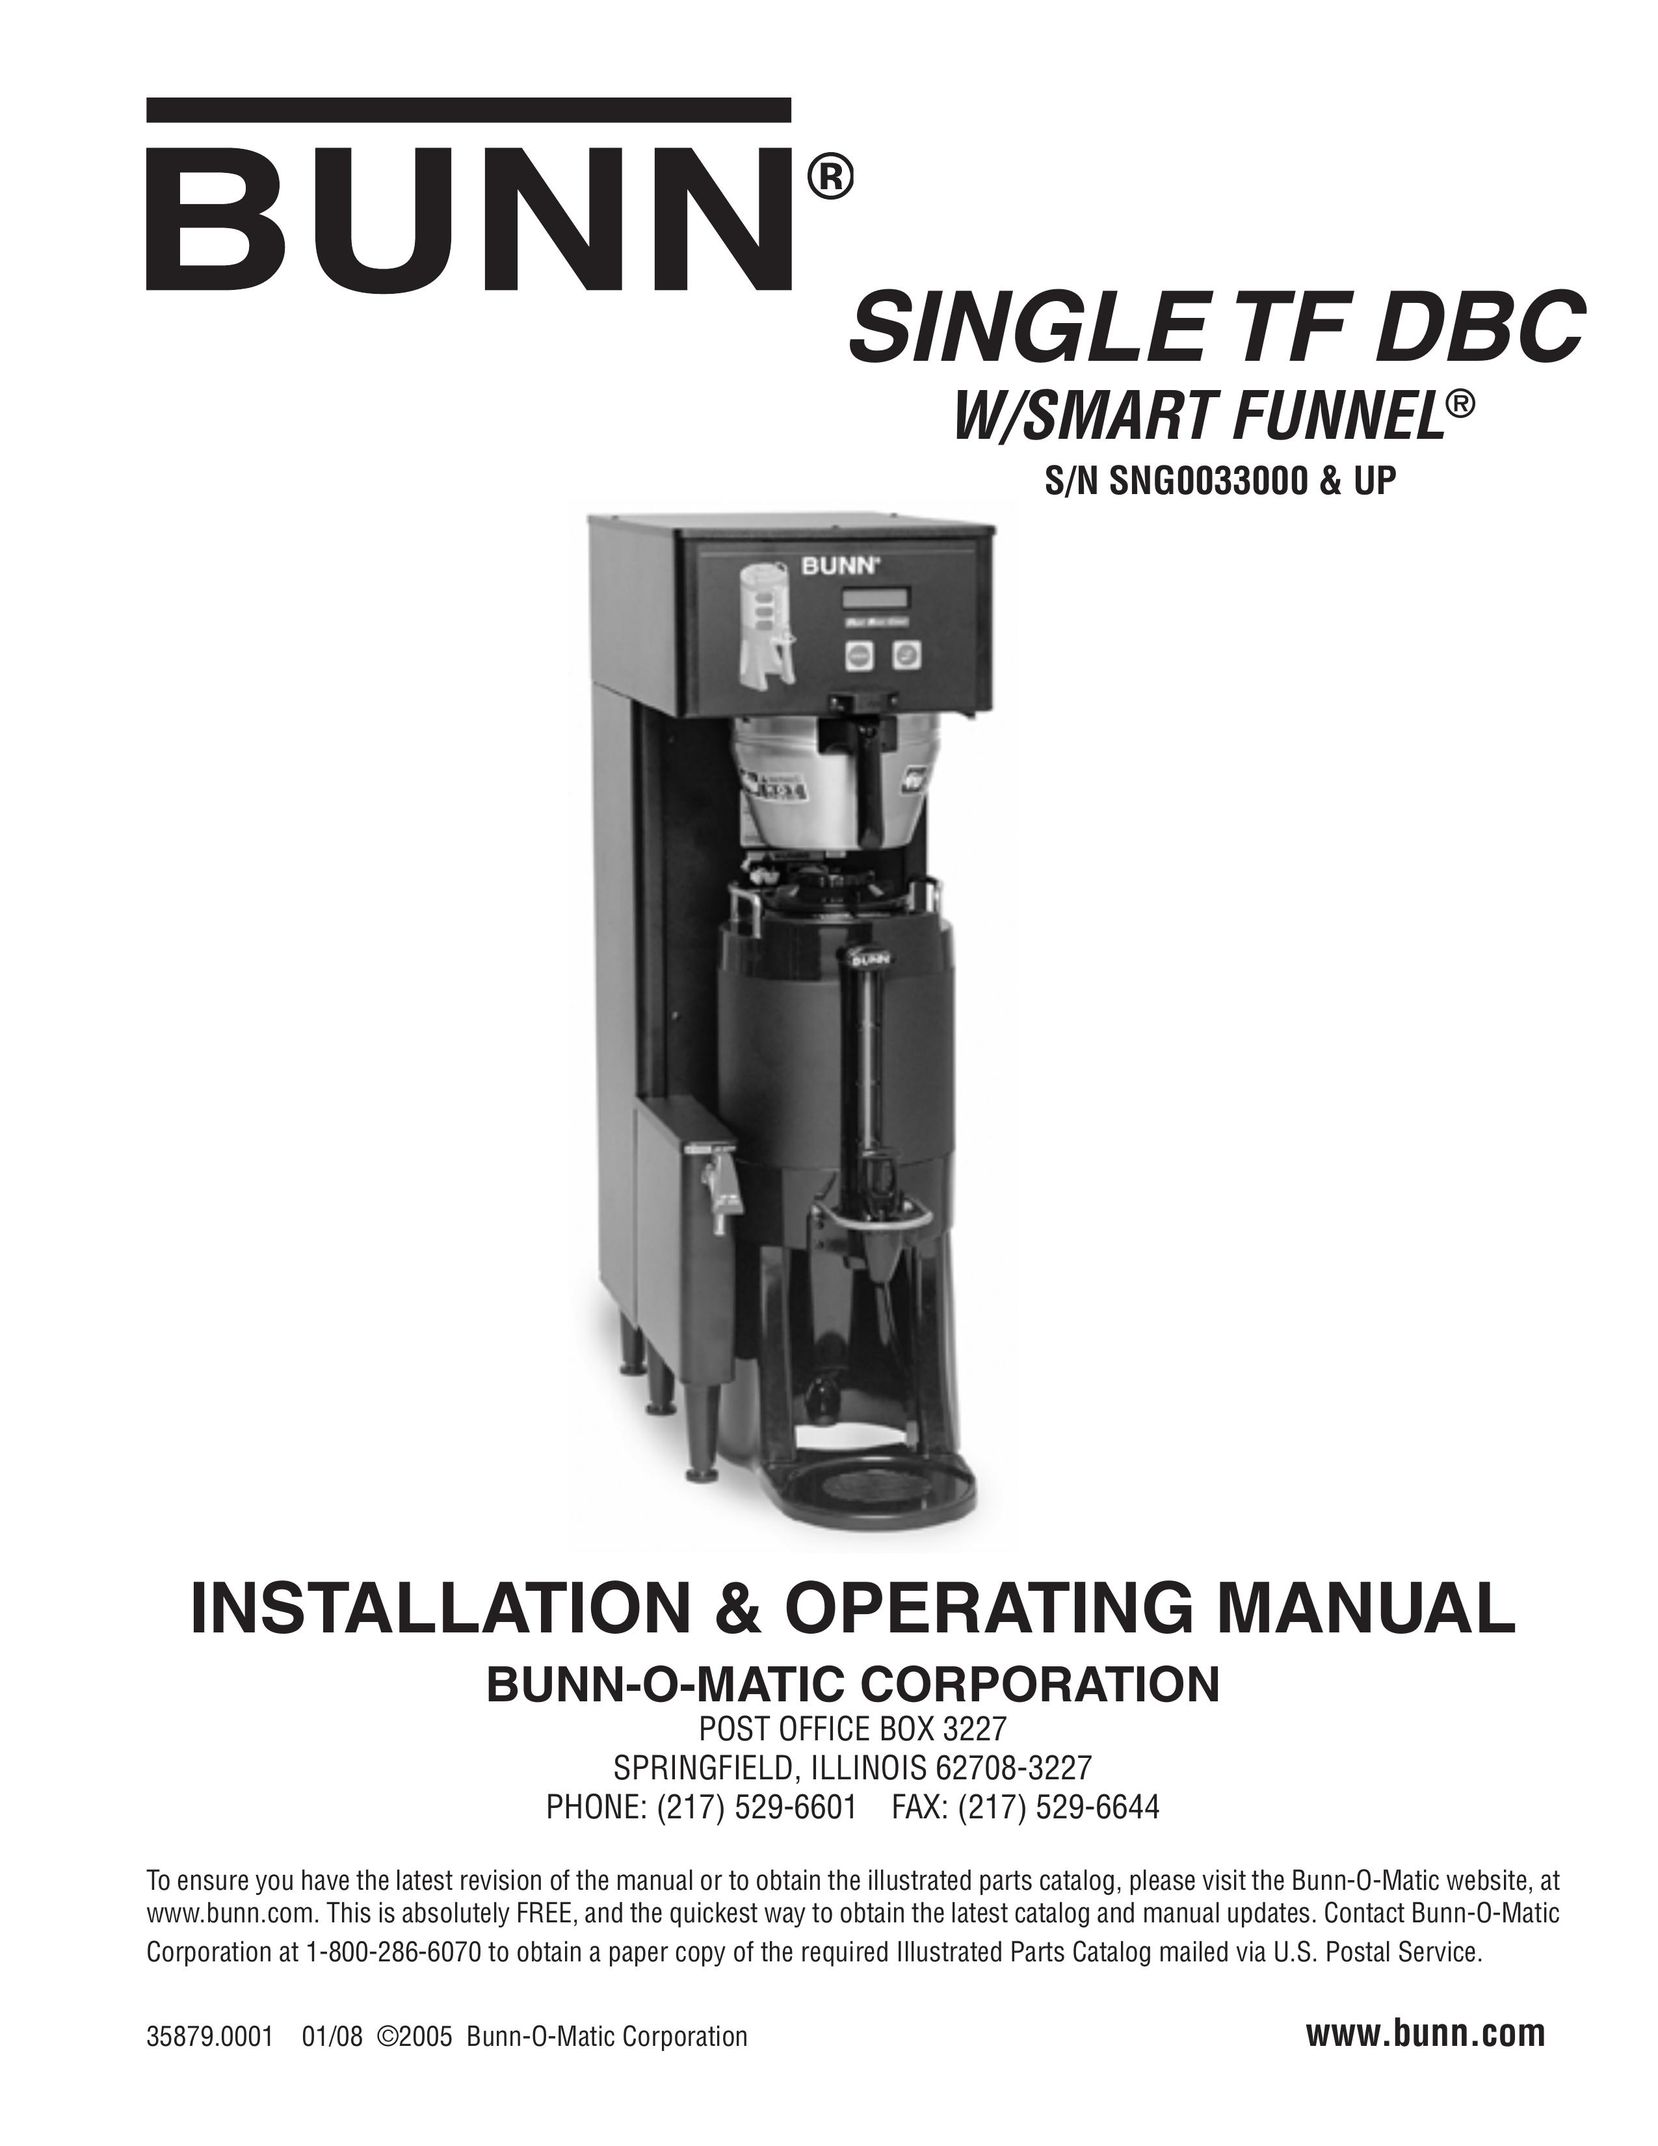 Bunn S/N SNG0033000 & UP Power Supply User Manual